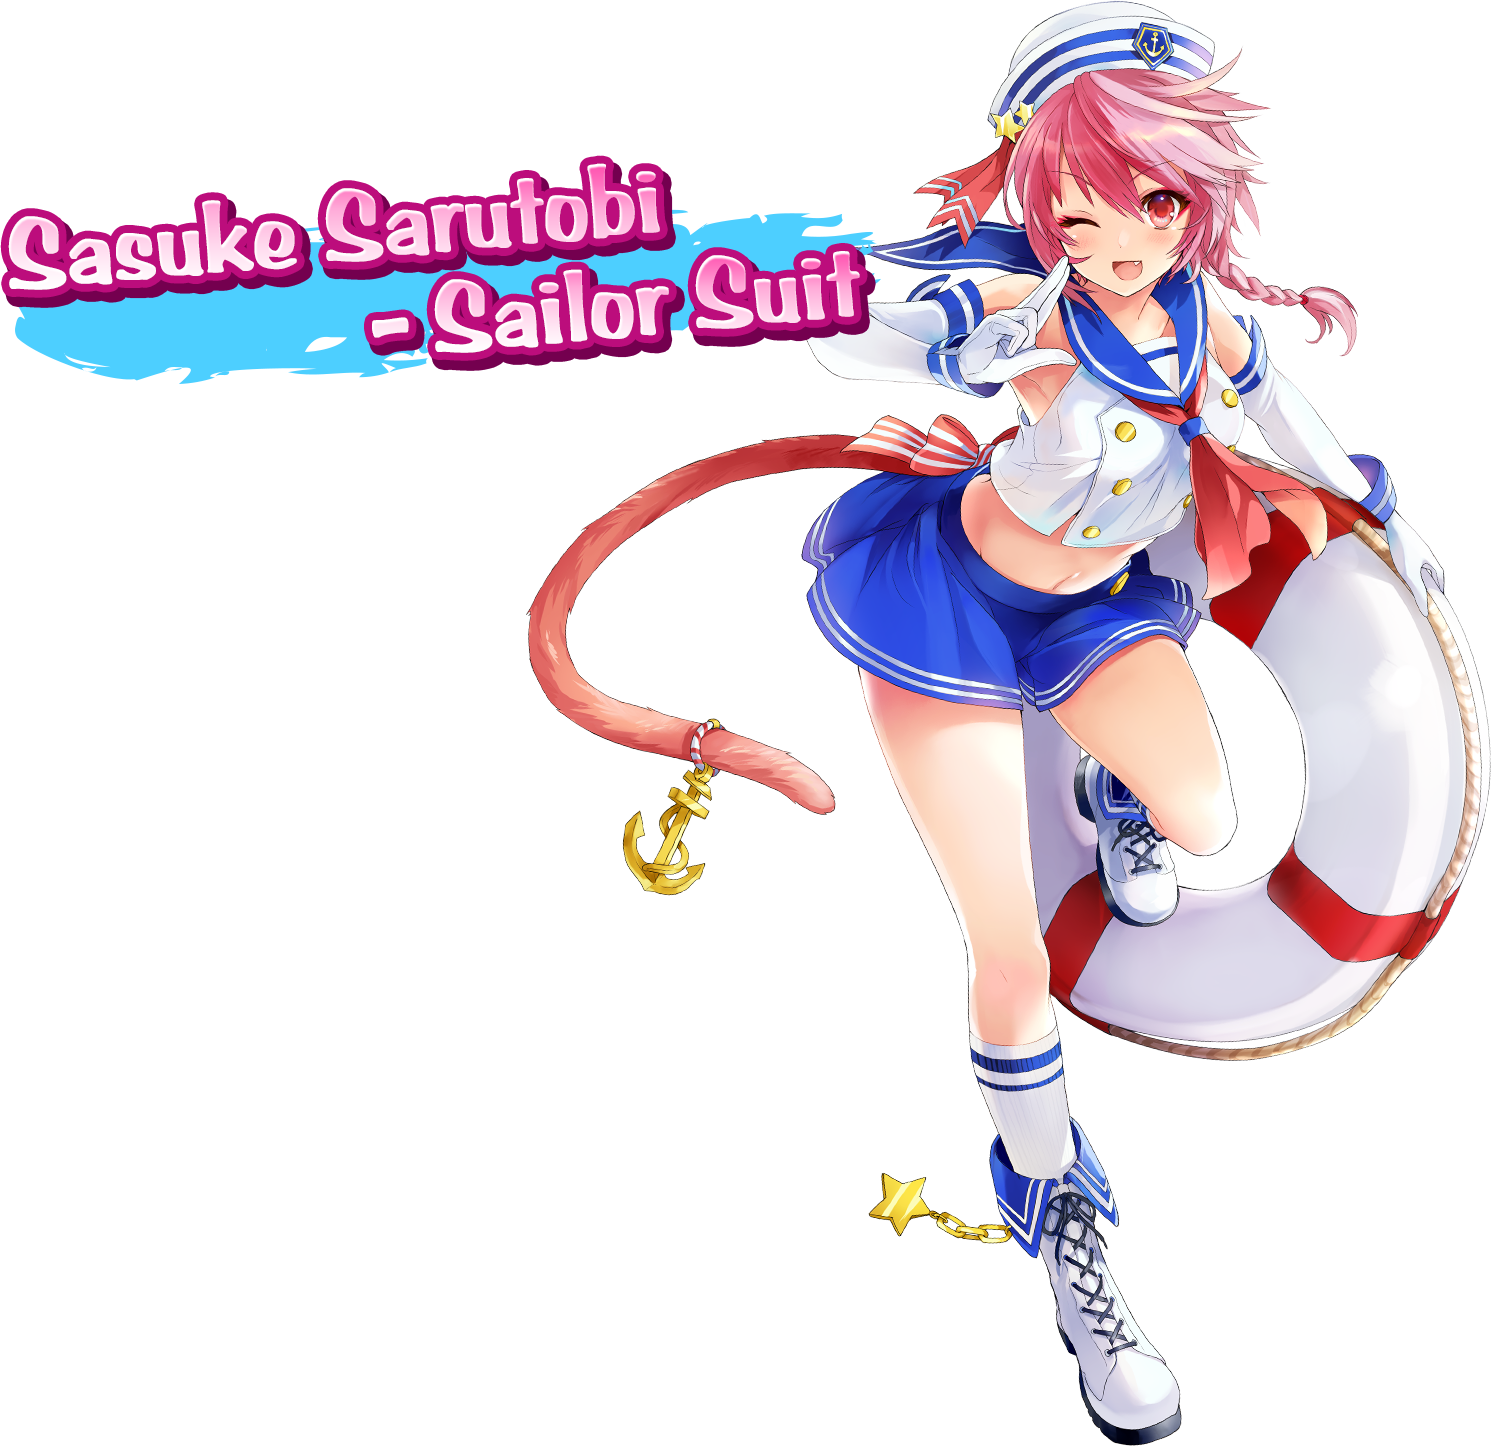 Sasuke Sarutobi - Sailor Suit